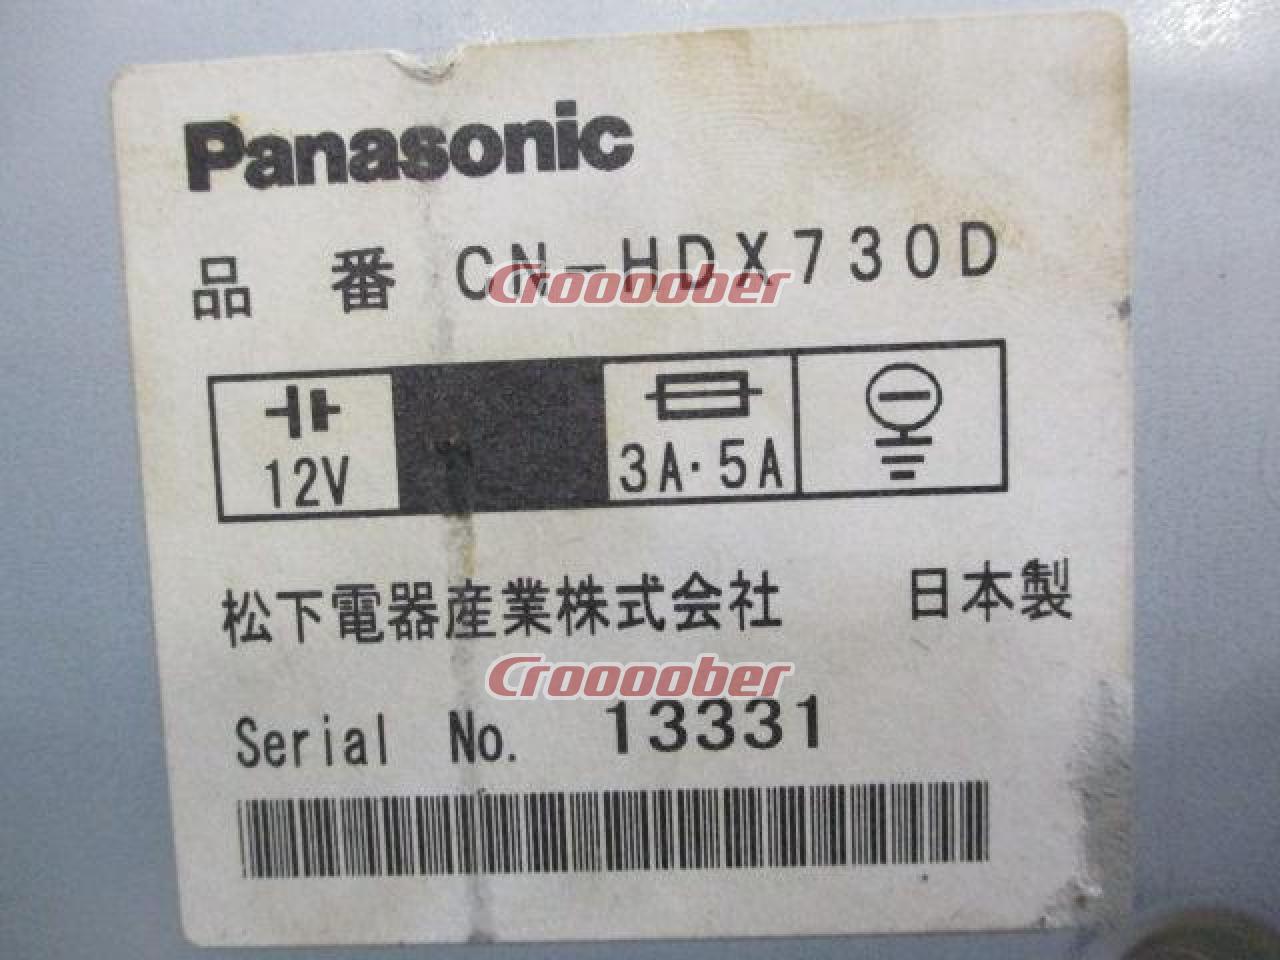 Panasonic CN-HDX730 | HDD Navigation(analog) | Croooober